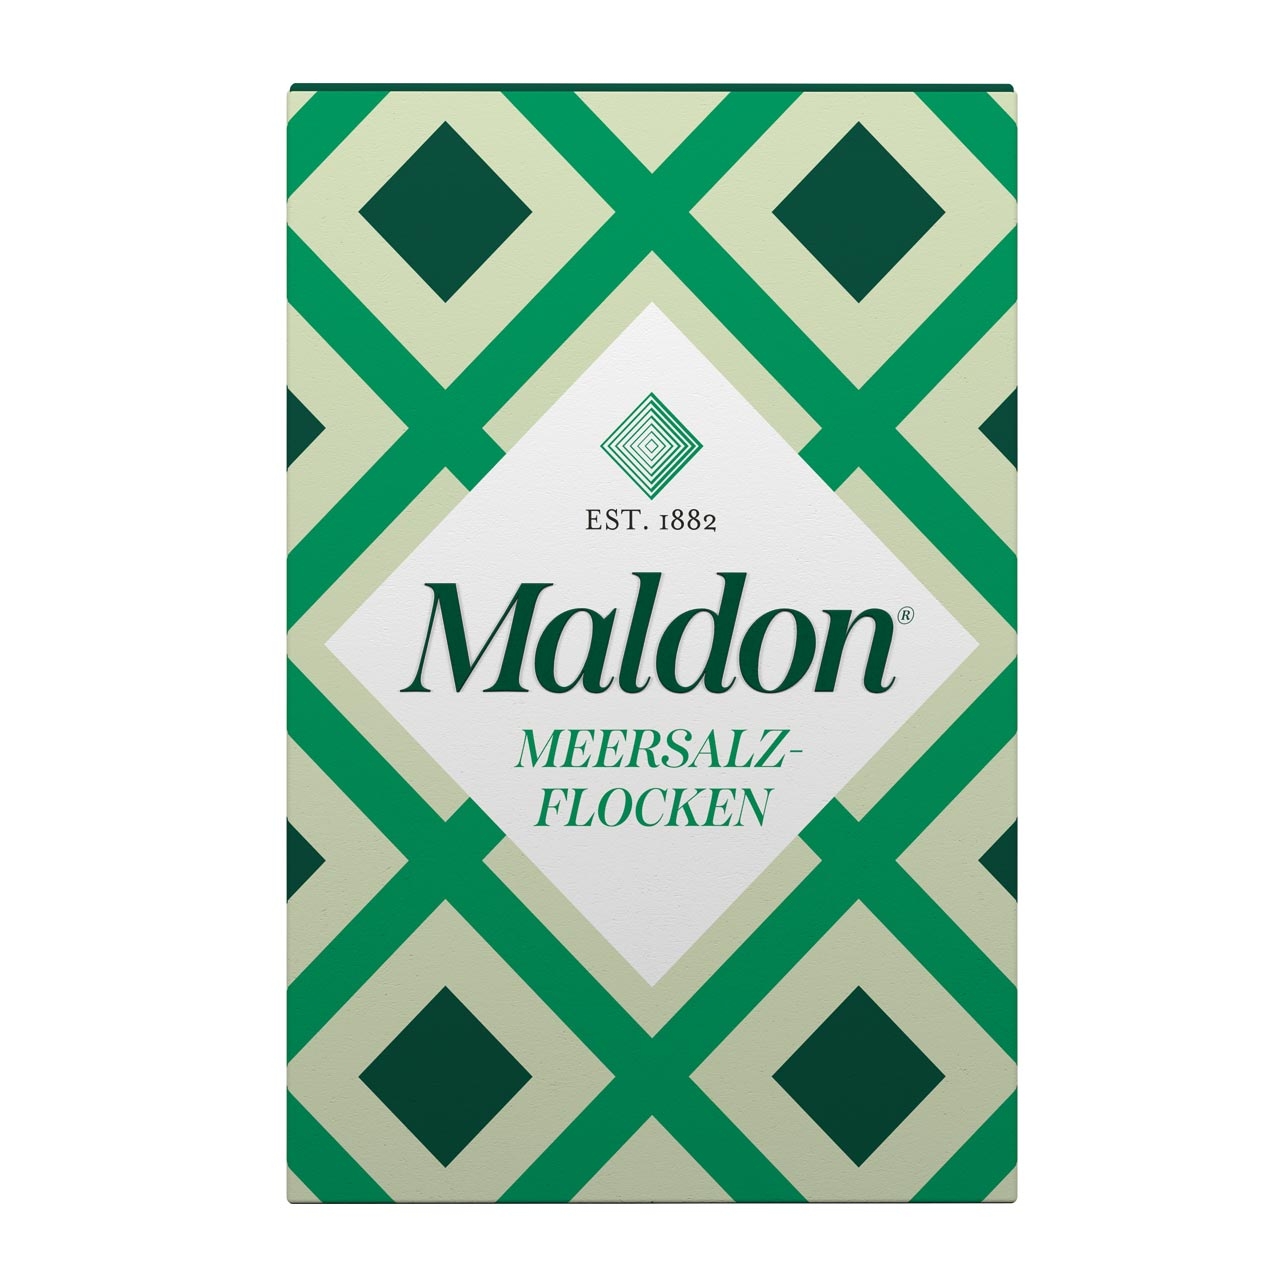 Maldon Sea Salt - 250 g